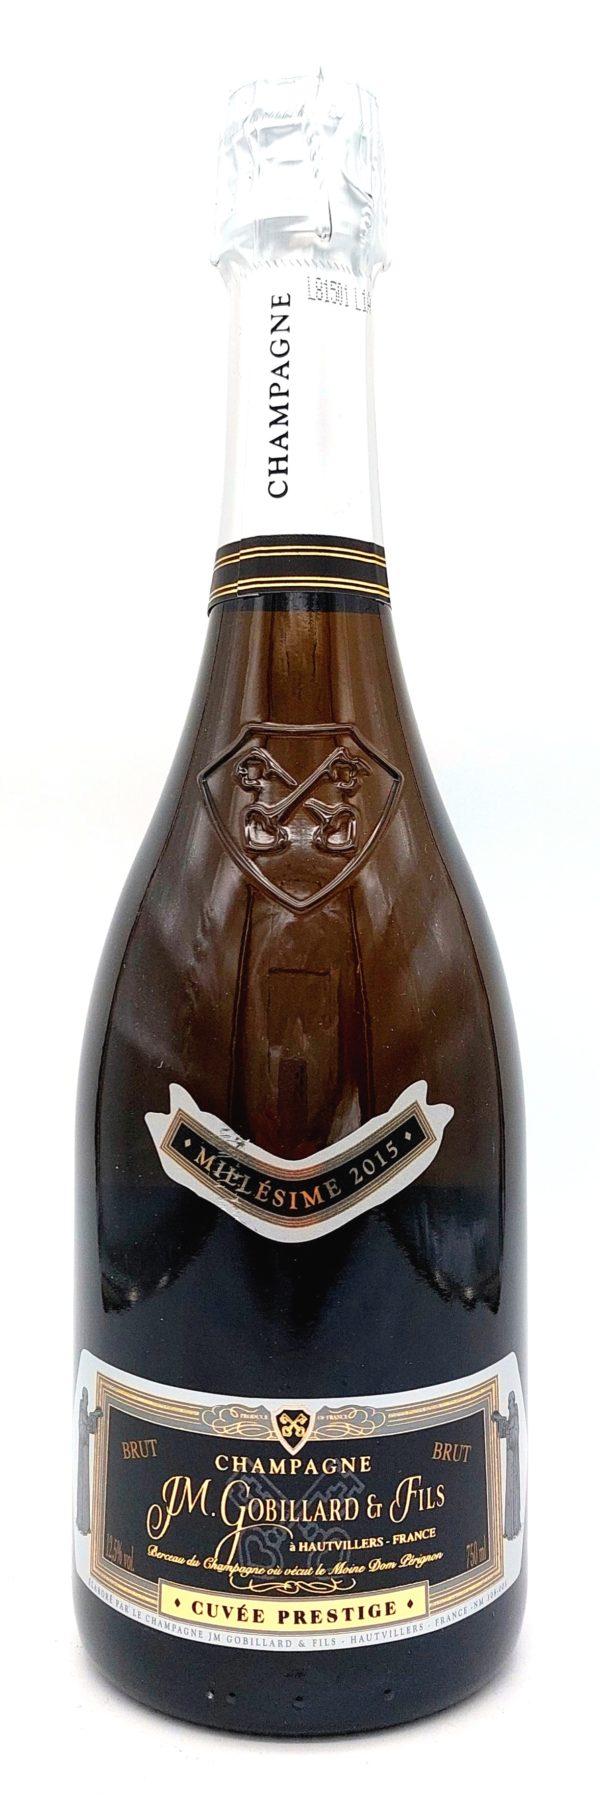 gobillard premier cru vintage champagne edinburgh scotland